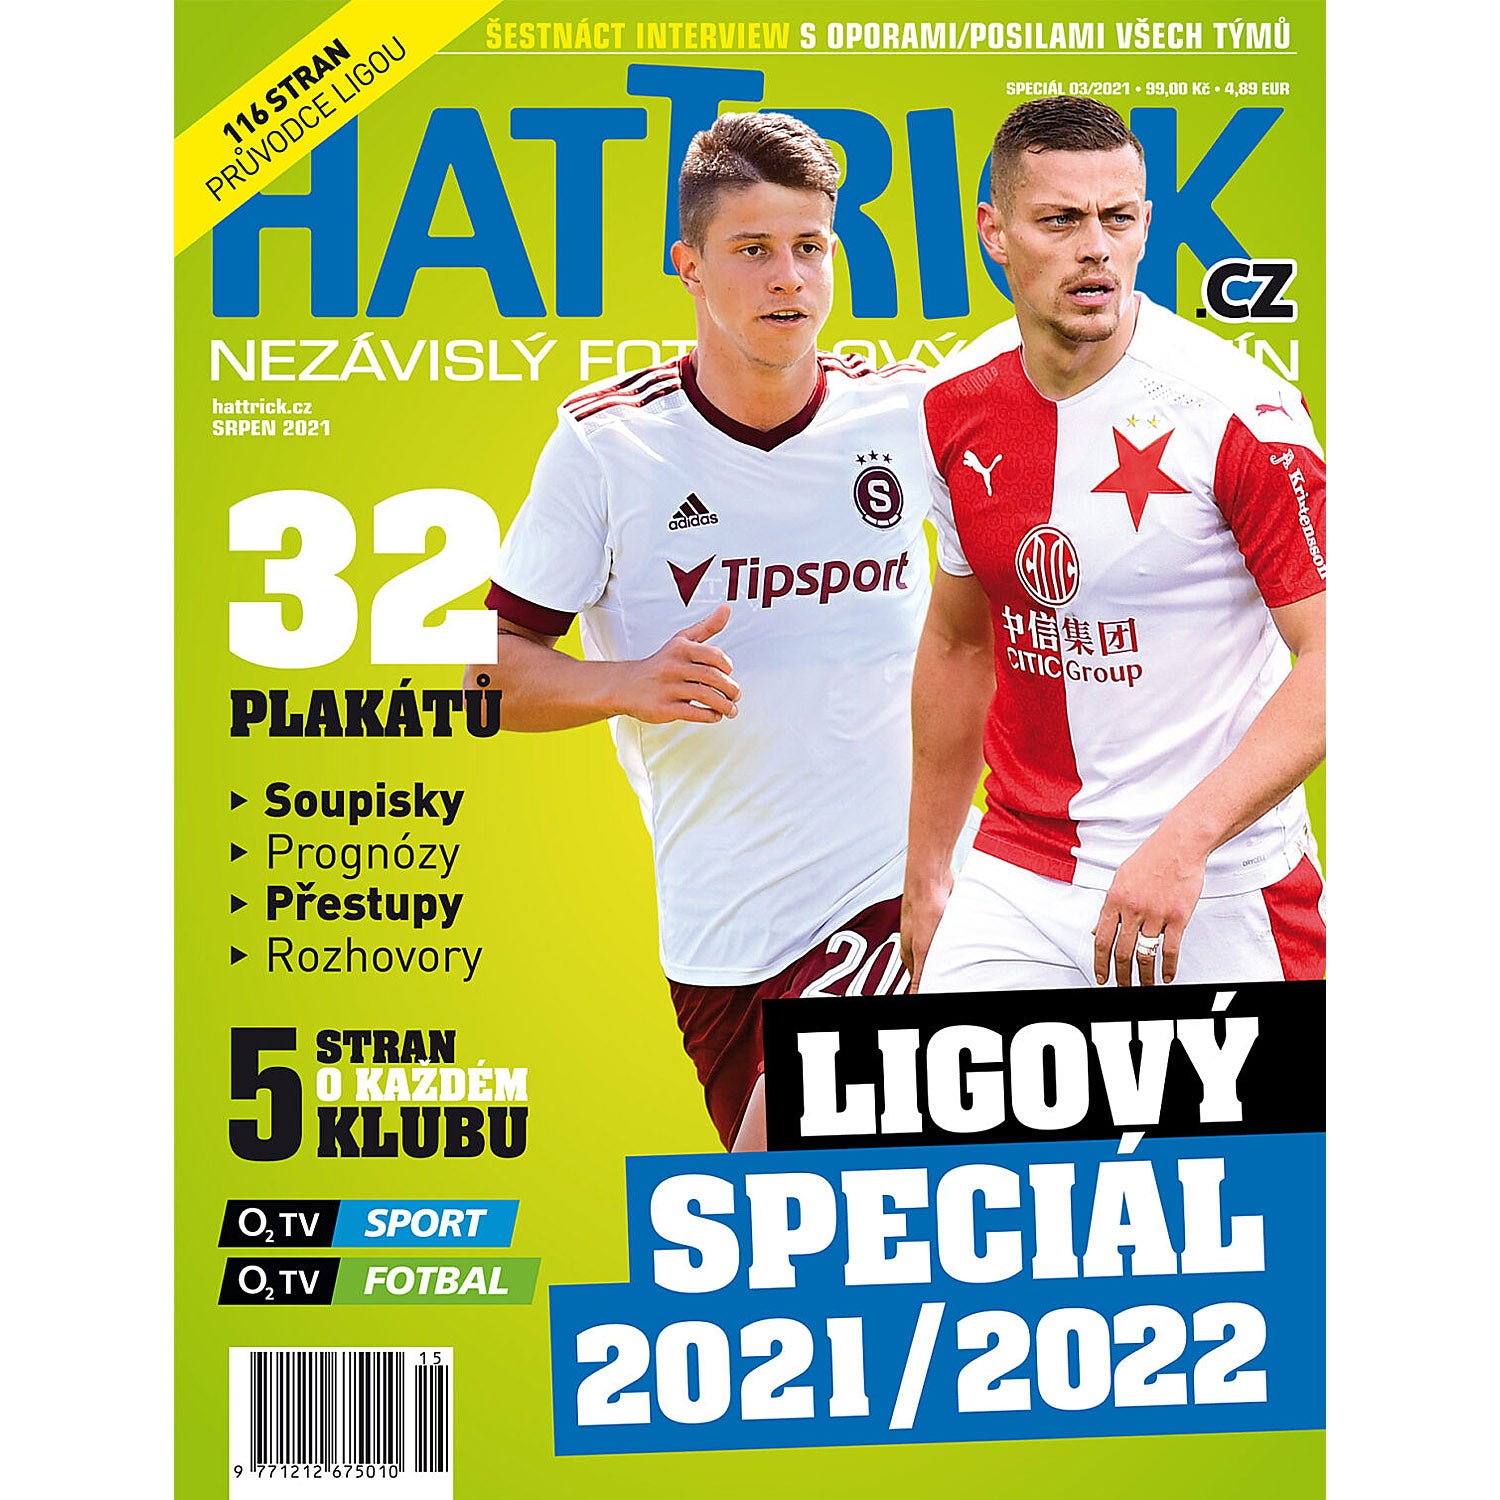 Hat Trick Ligovy Special 2021/2022 (Czech Republic Season Preview)